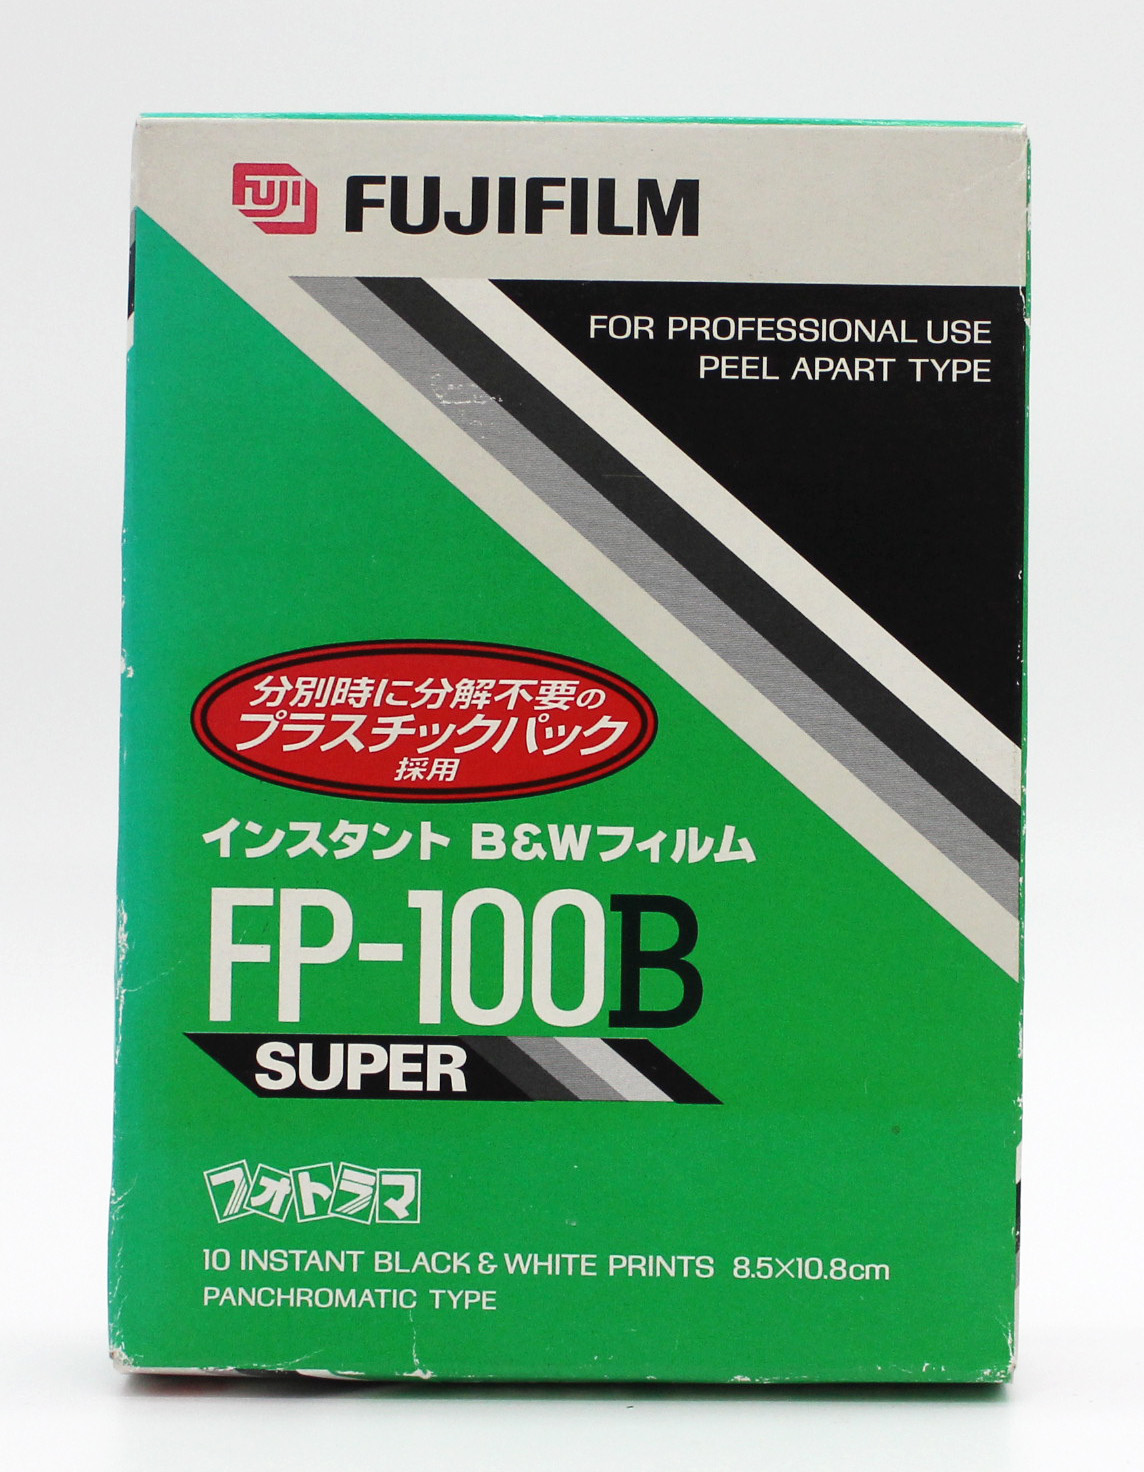  Fujifilm FP-100B Instant Black & White Film (Expired 09/2004) from Japan Photo 0